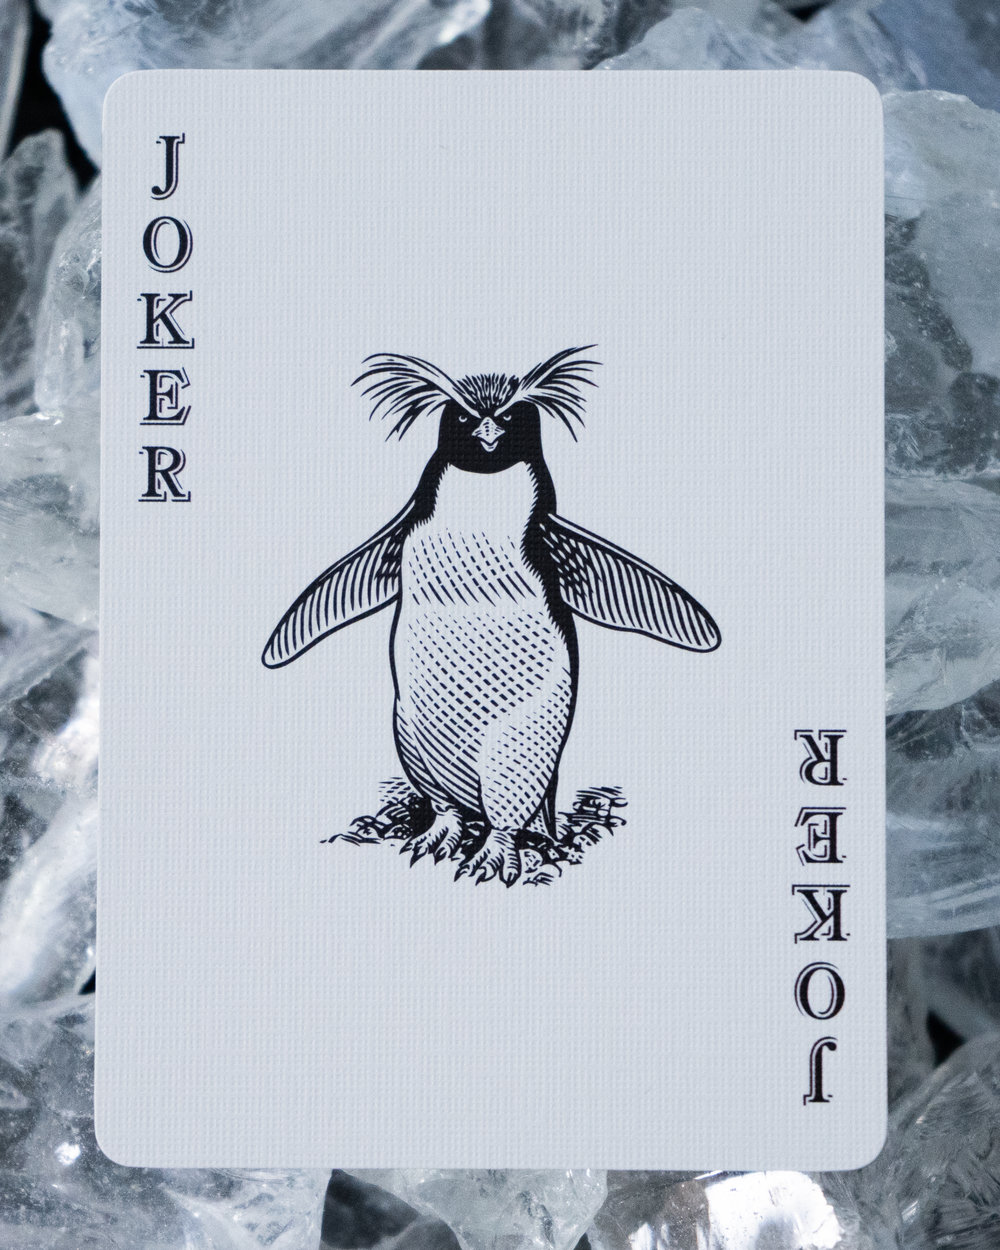 Emperor Joker Ice 4x5.jpg